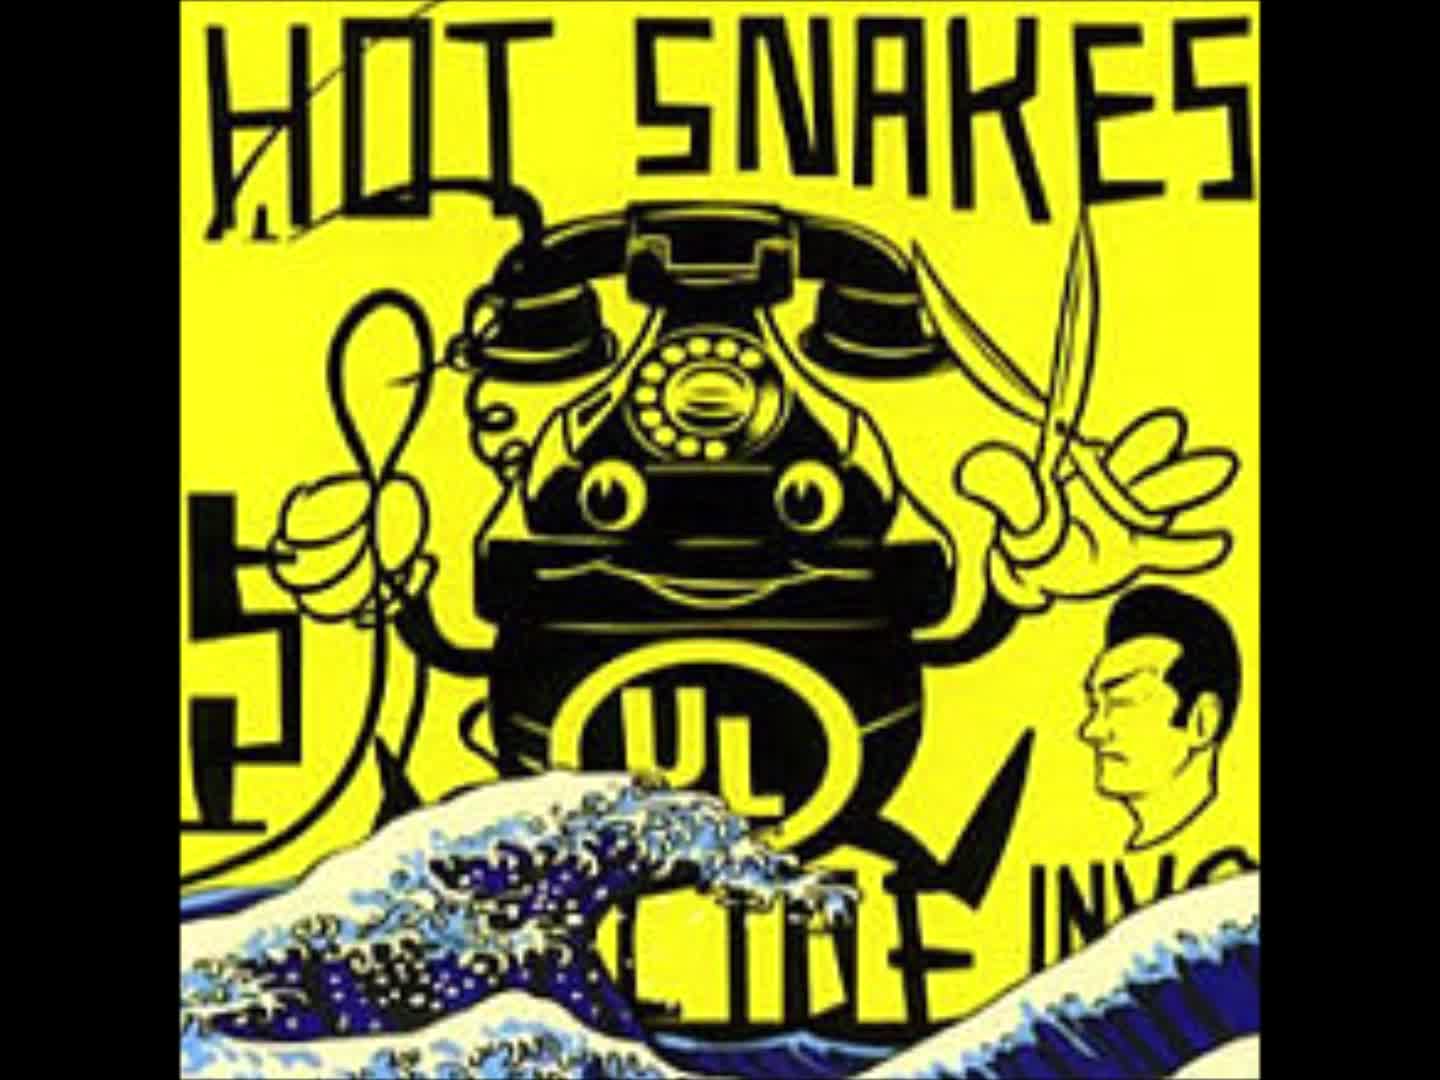 Hot Snakes - Paperwork